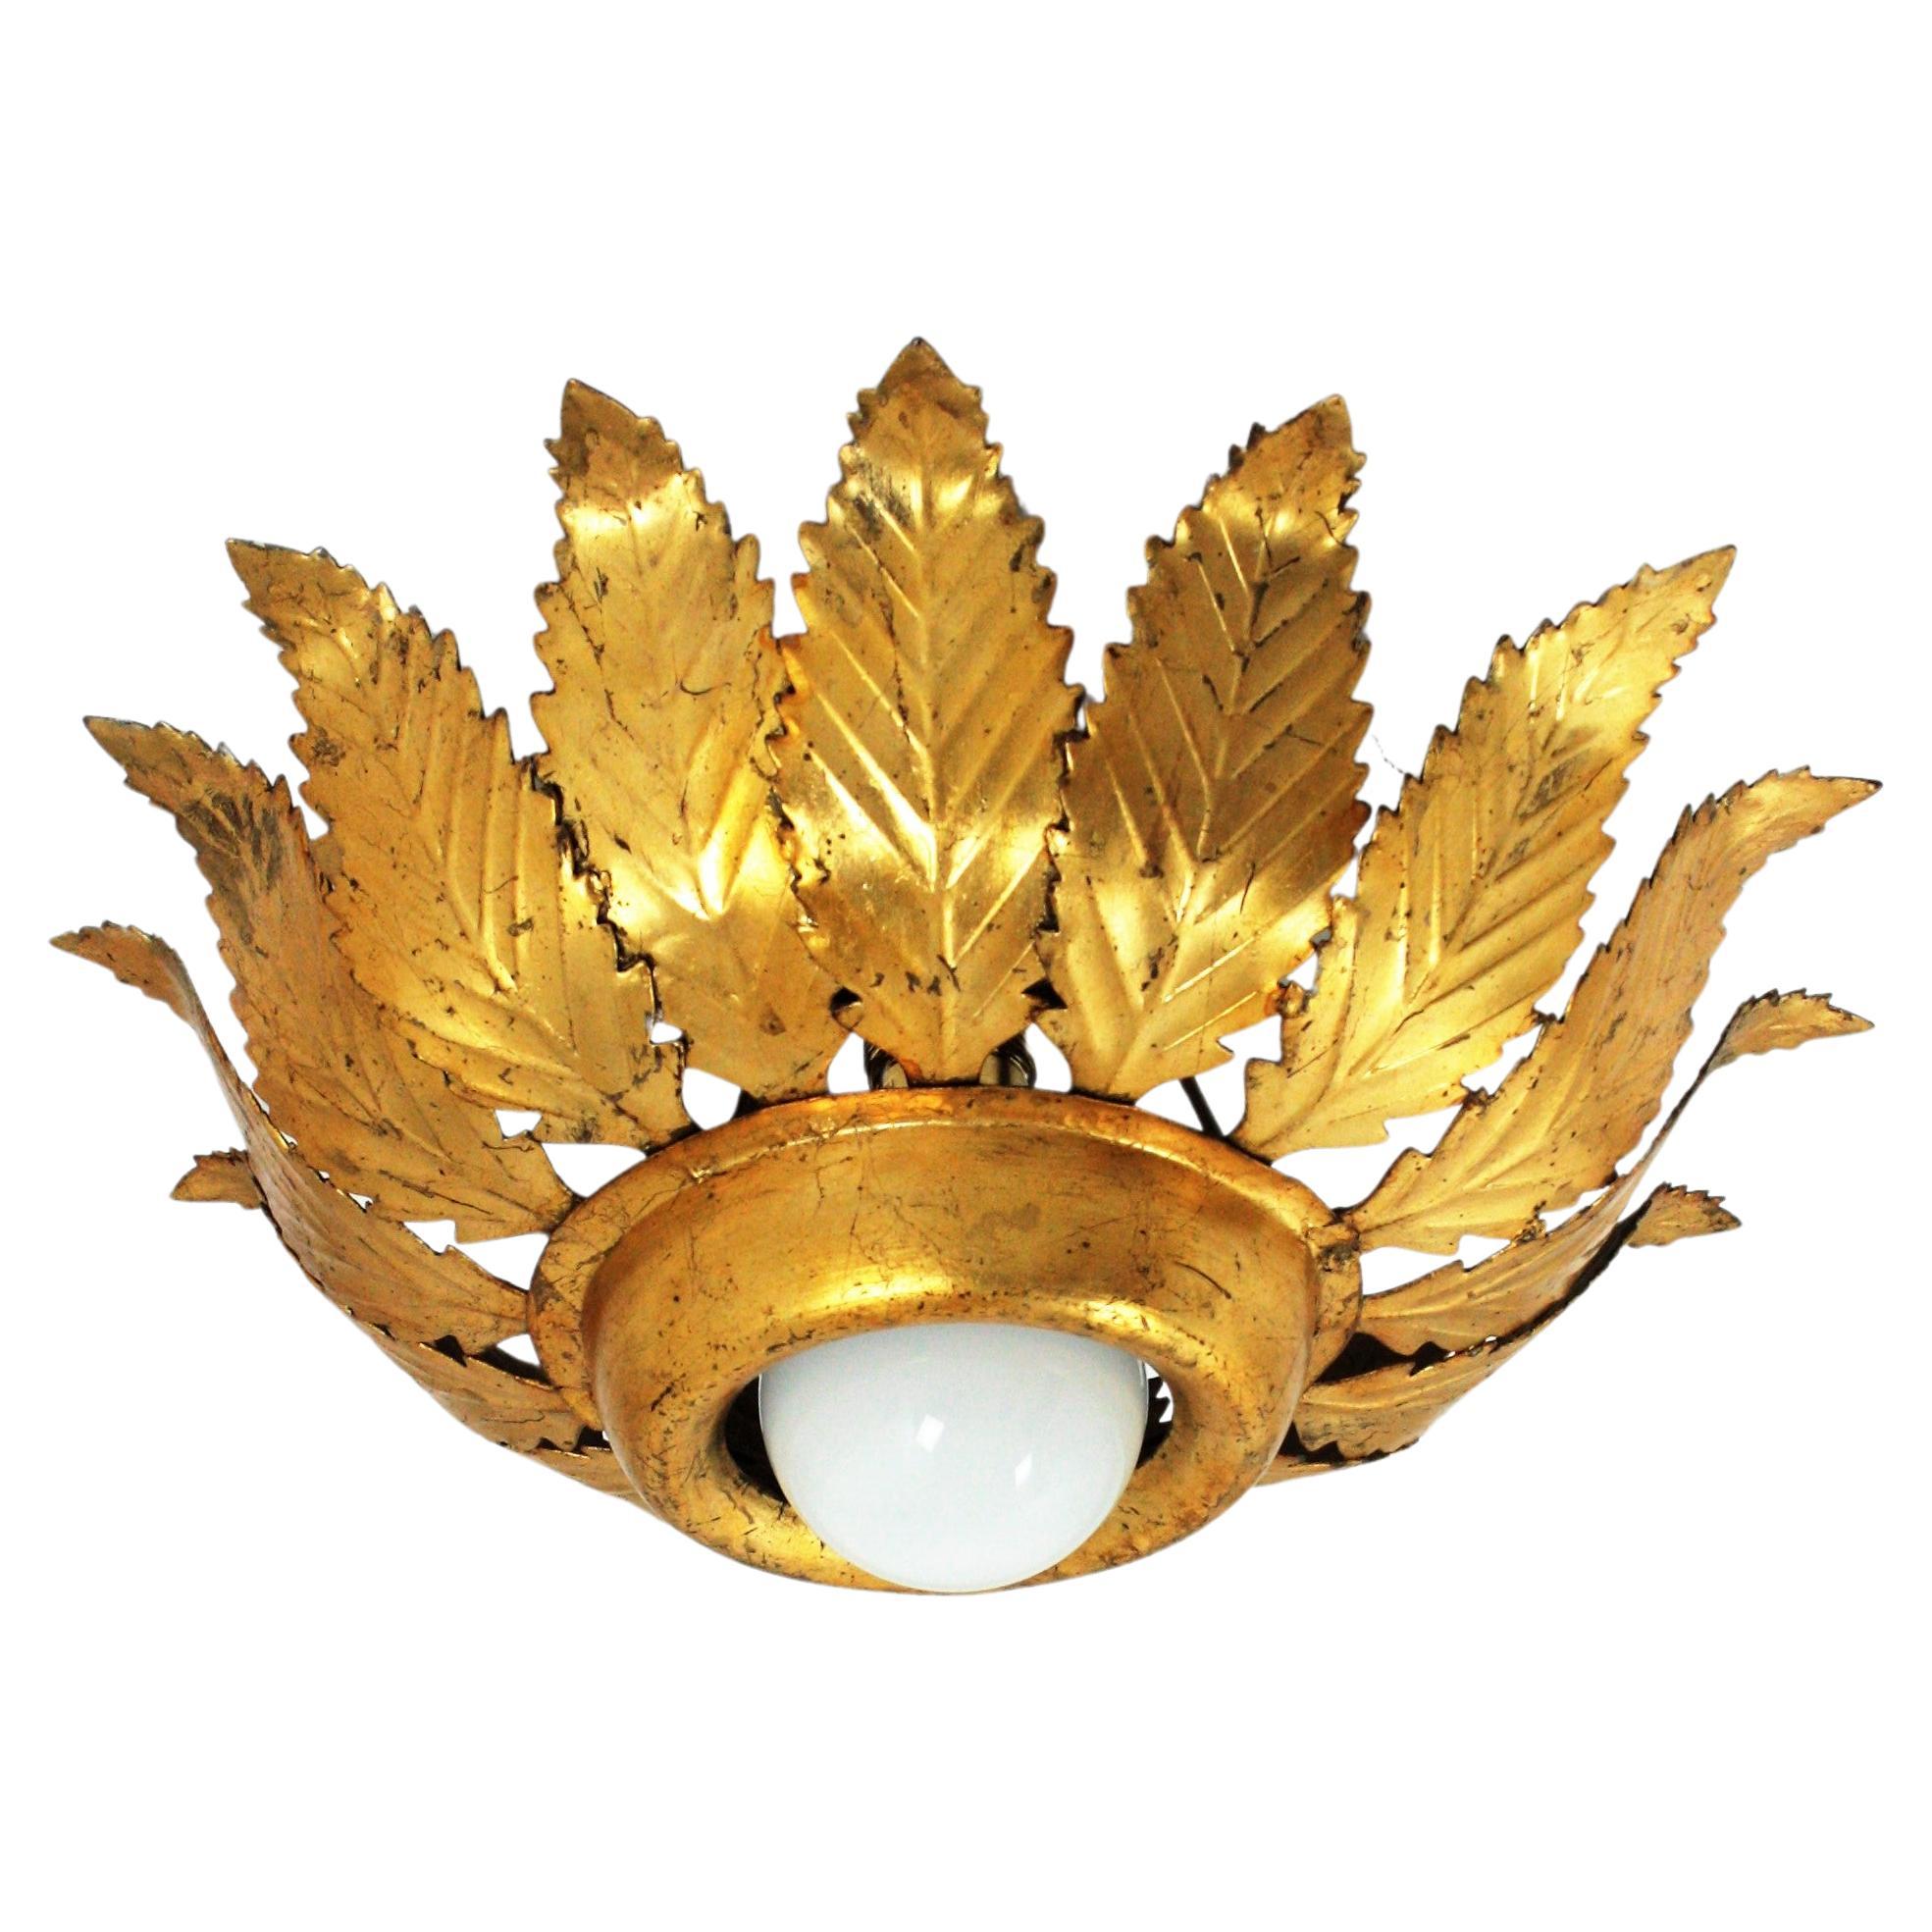 Sunburst Crown Leafed Light Fixture in Gilt Iron